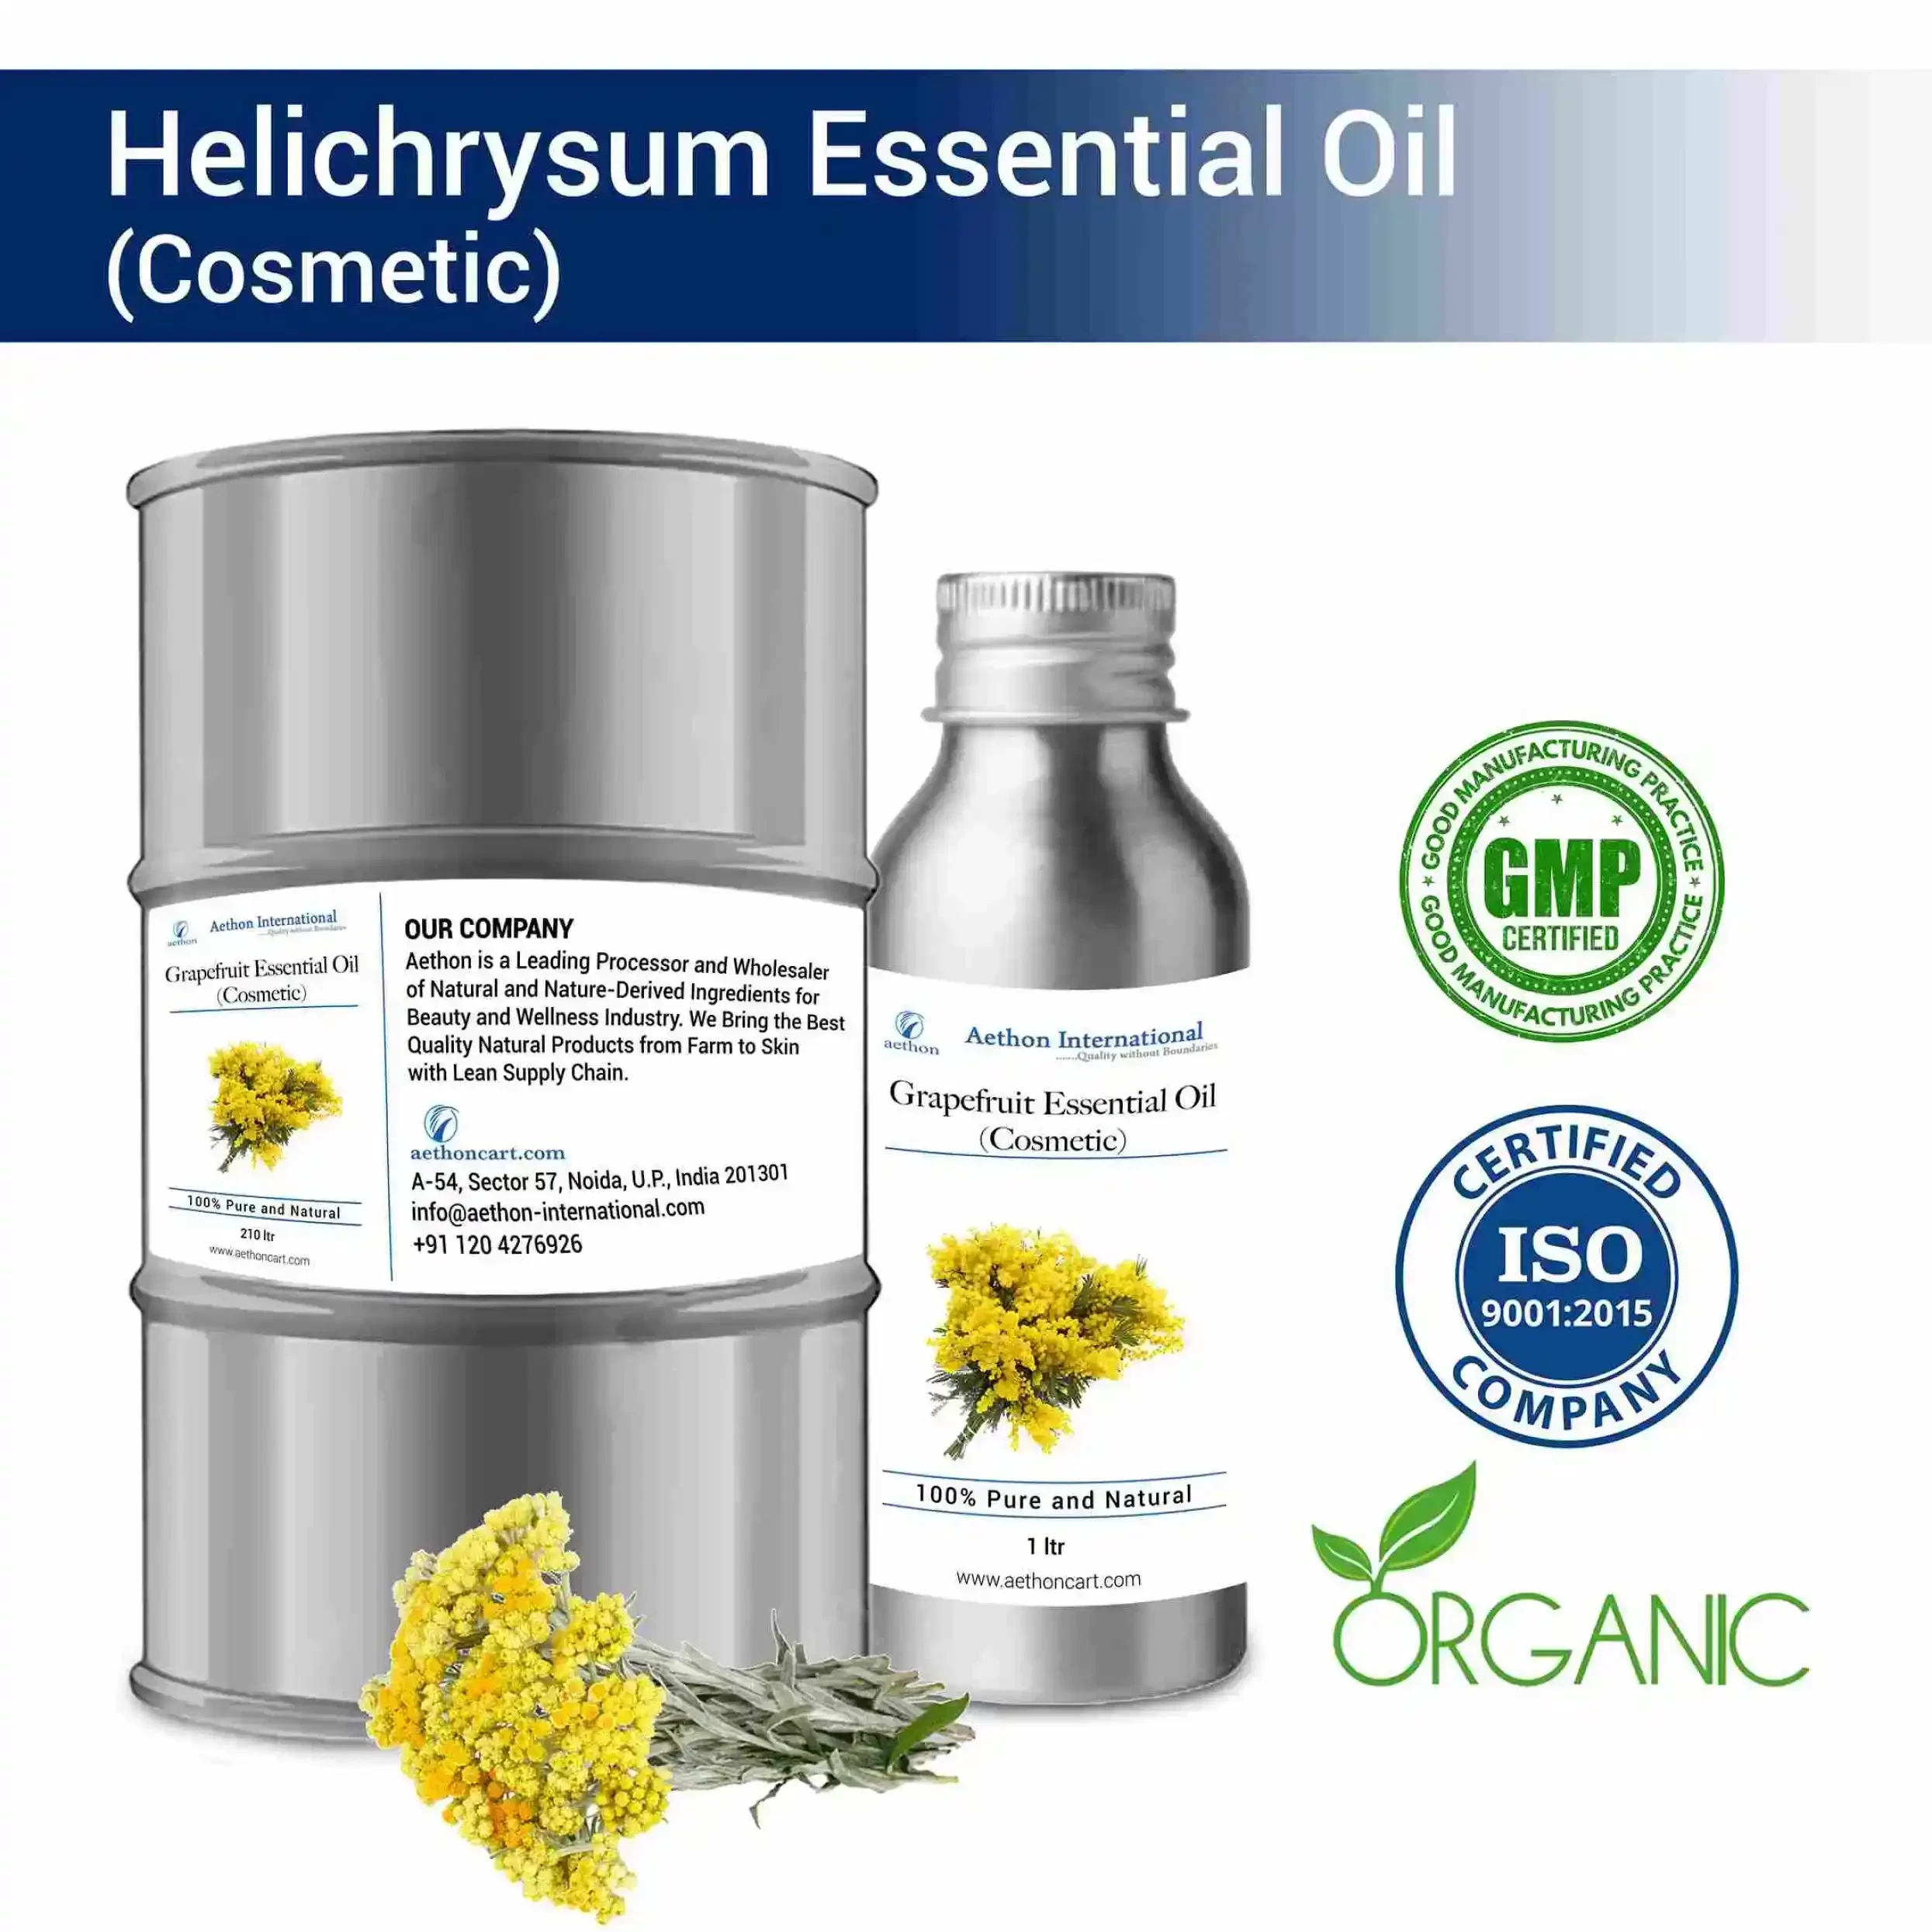 Helichrysum Essential Oil (Cosmetic)